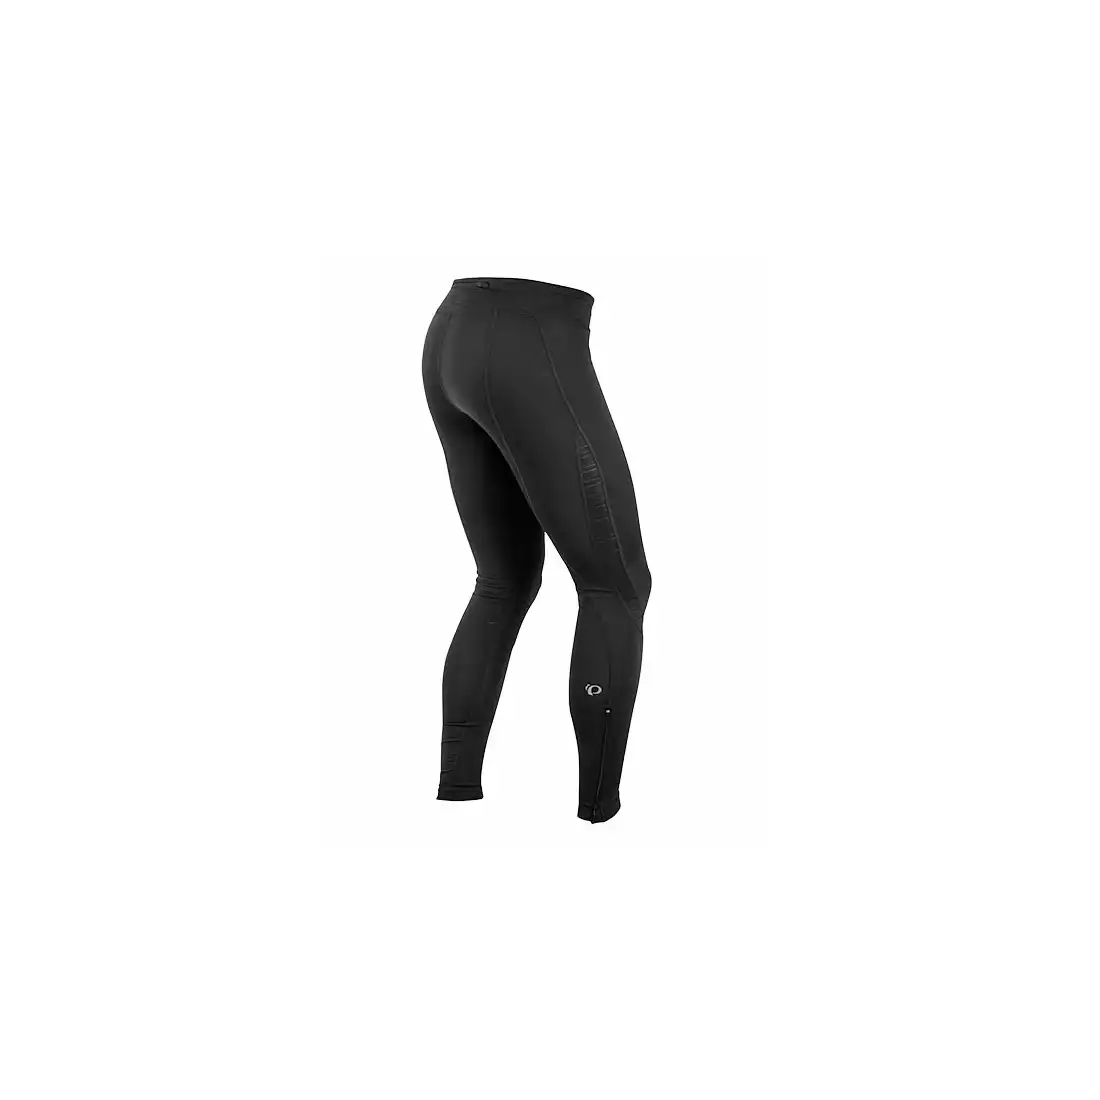 PEARL IZUMI RUN damskie spodnie do biegania FLY 12211407- 021, kolor: czarny